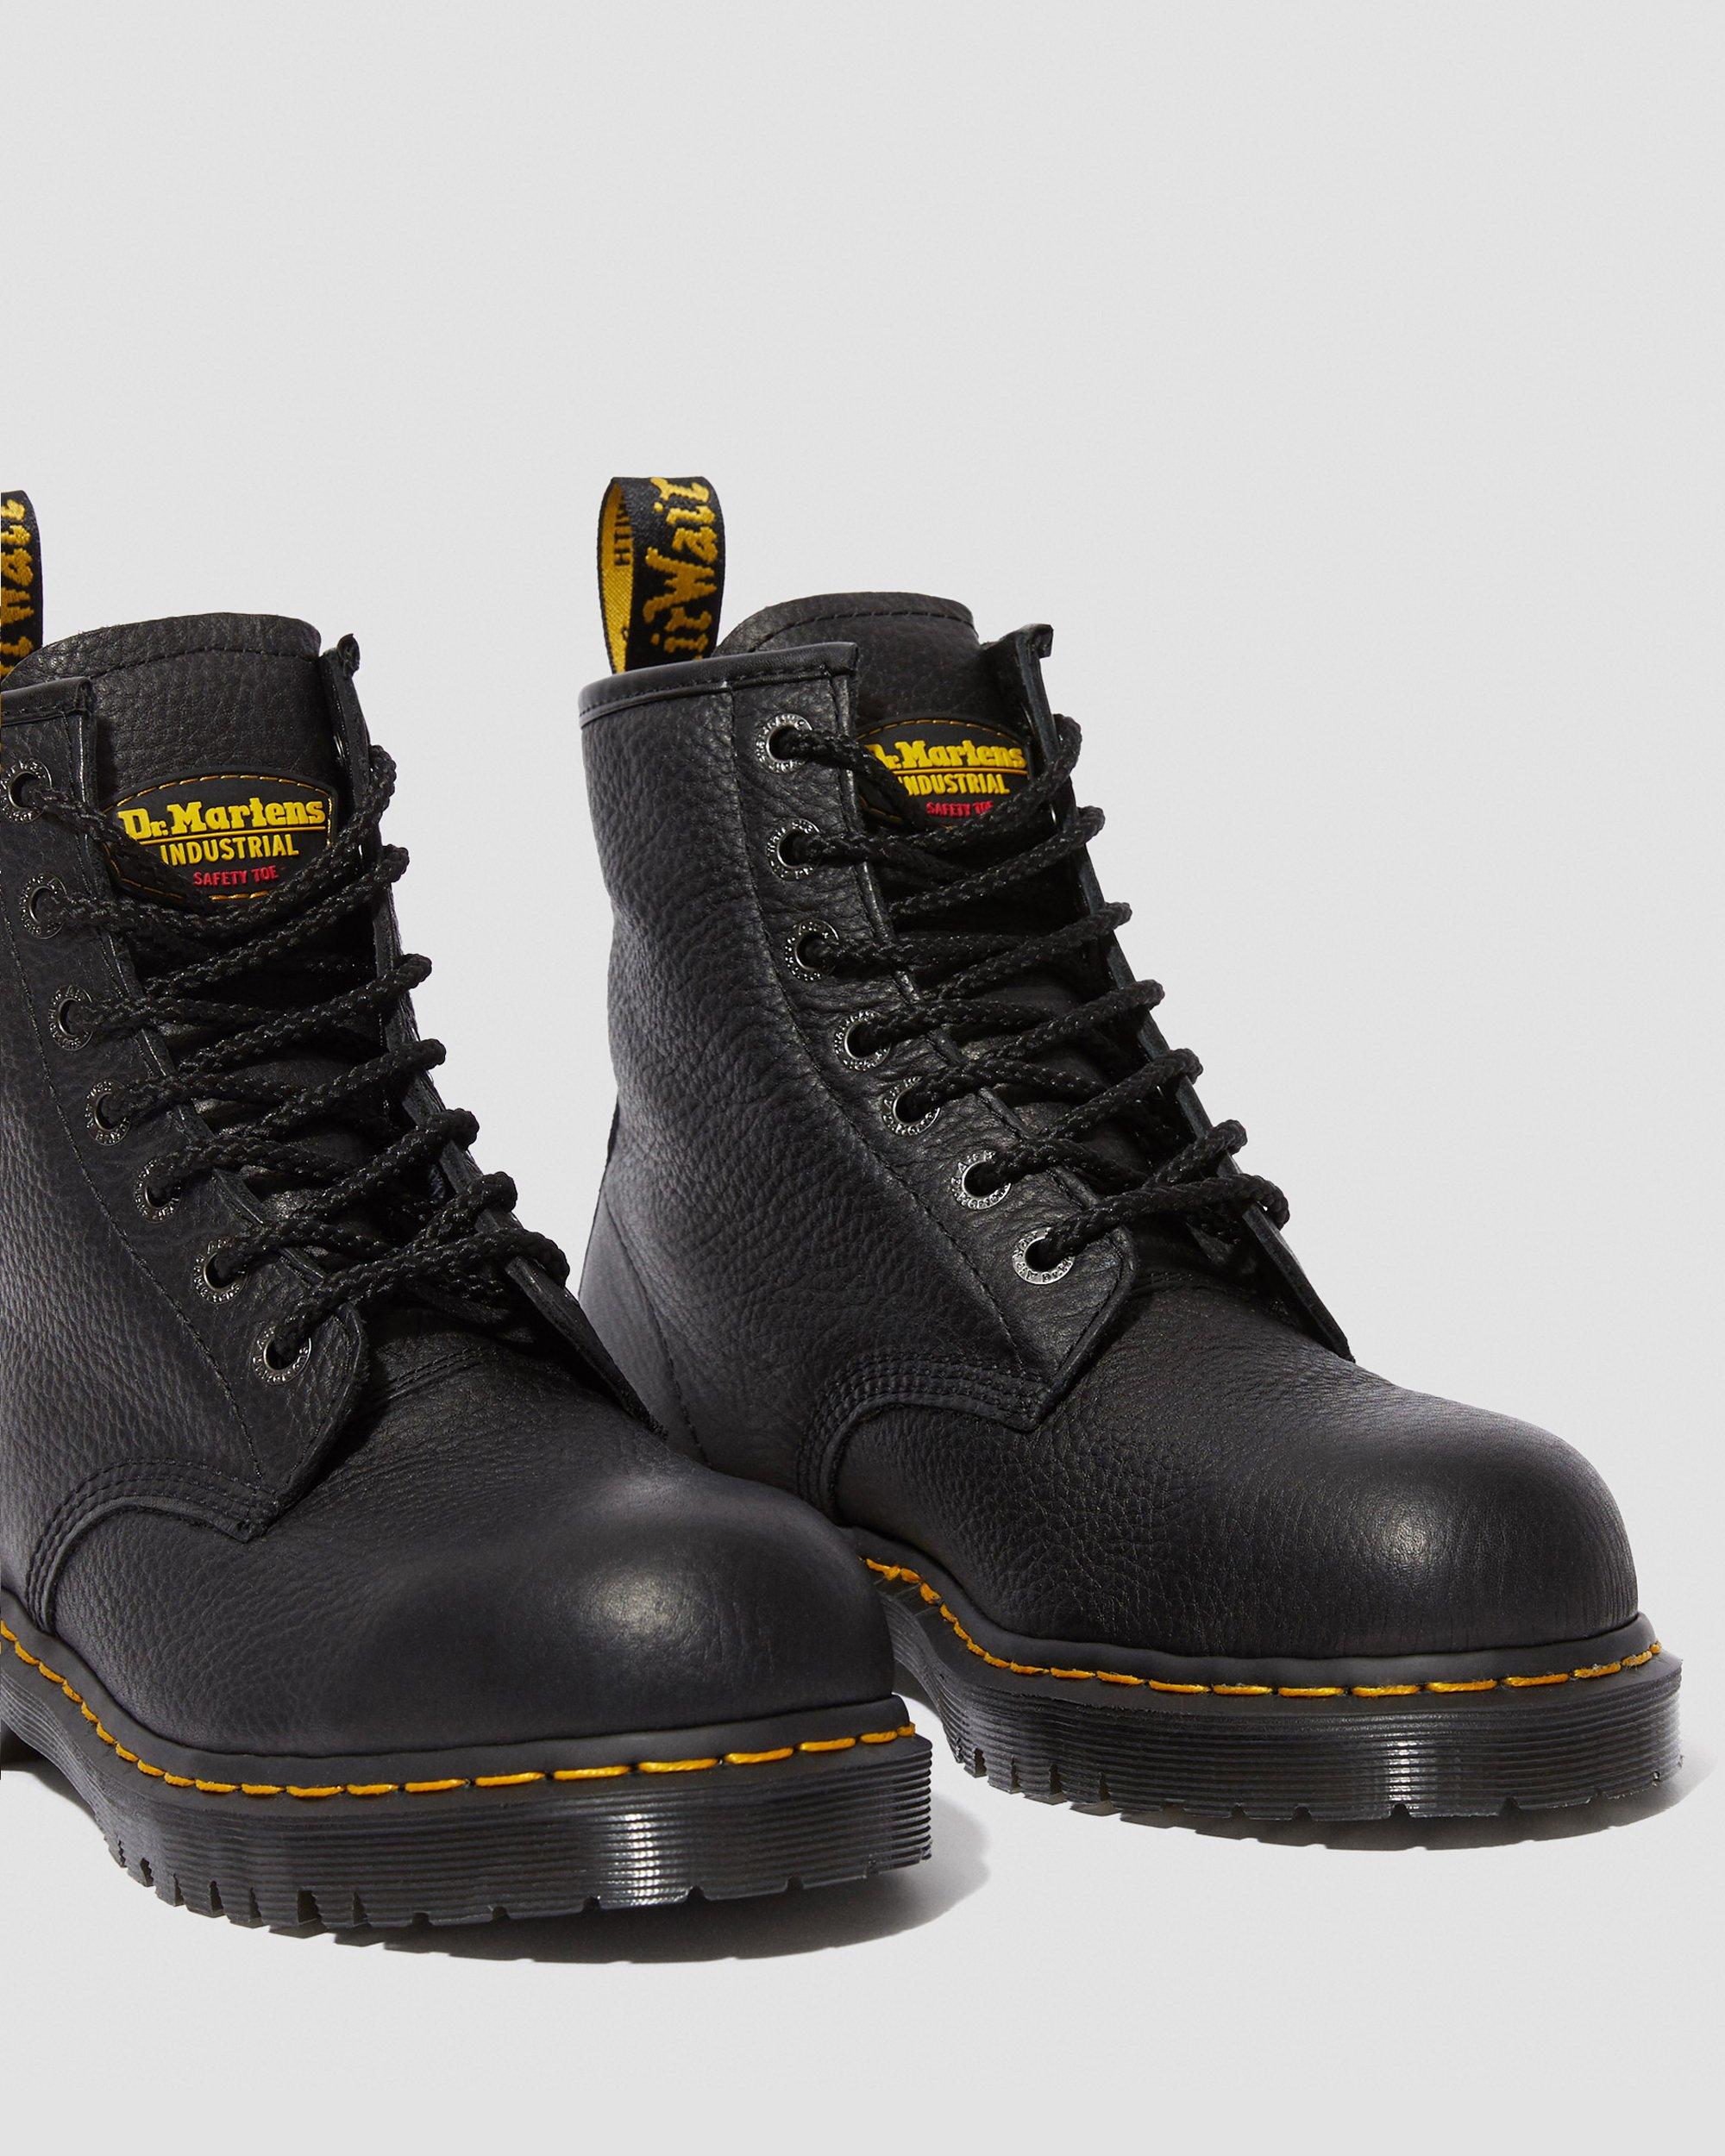 Menda City Vleugels minimum Icon 7B10 Leather Steel Toe Work Boots | Dr. Martens